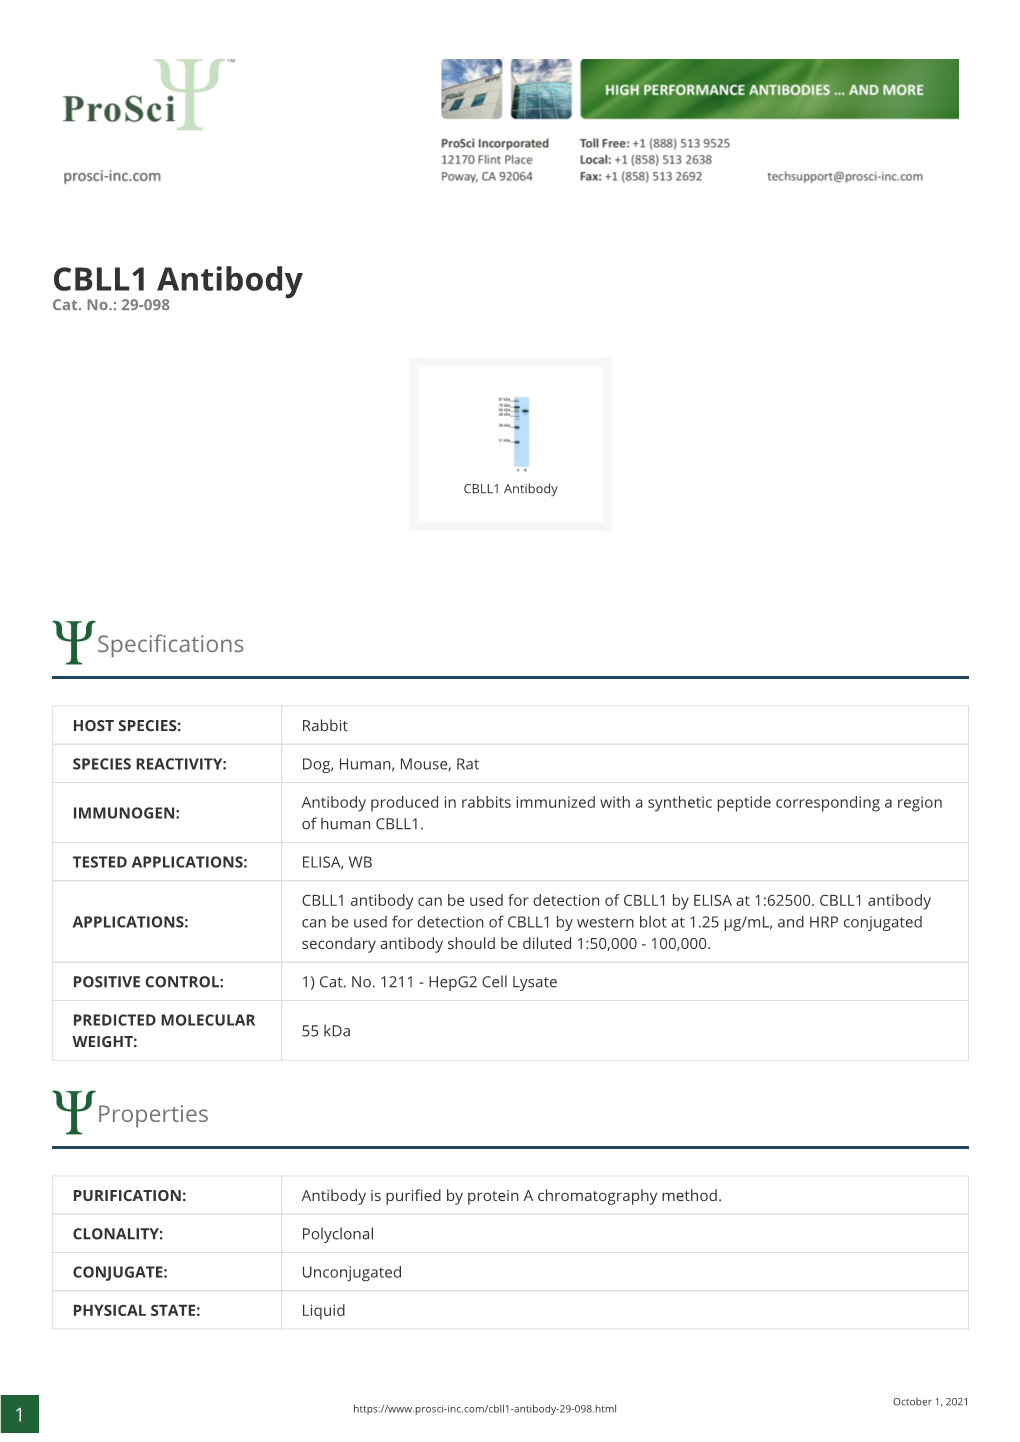 CBLL1 Antibody Cat